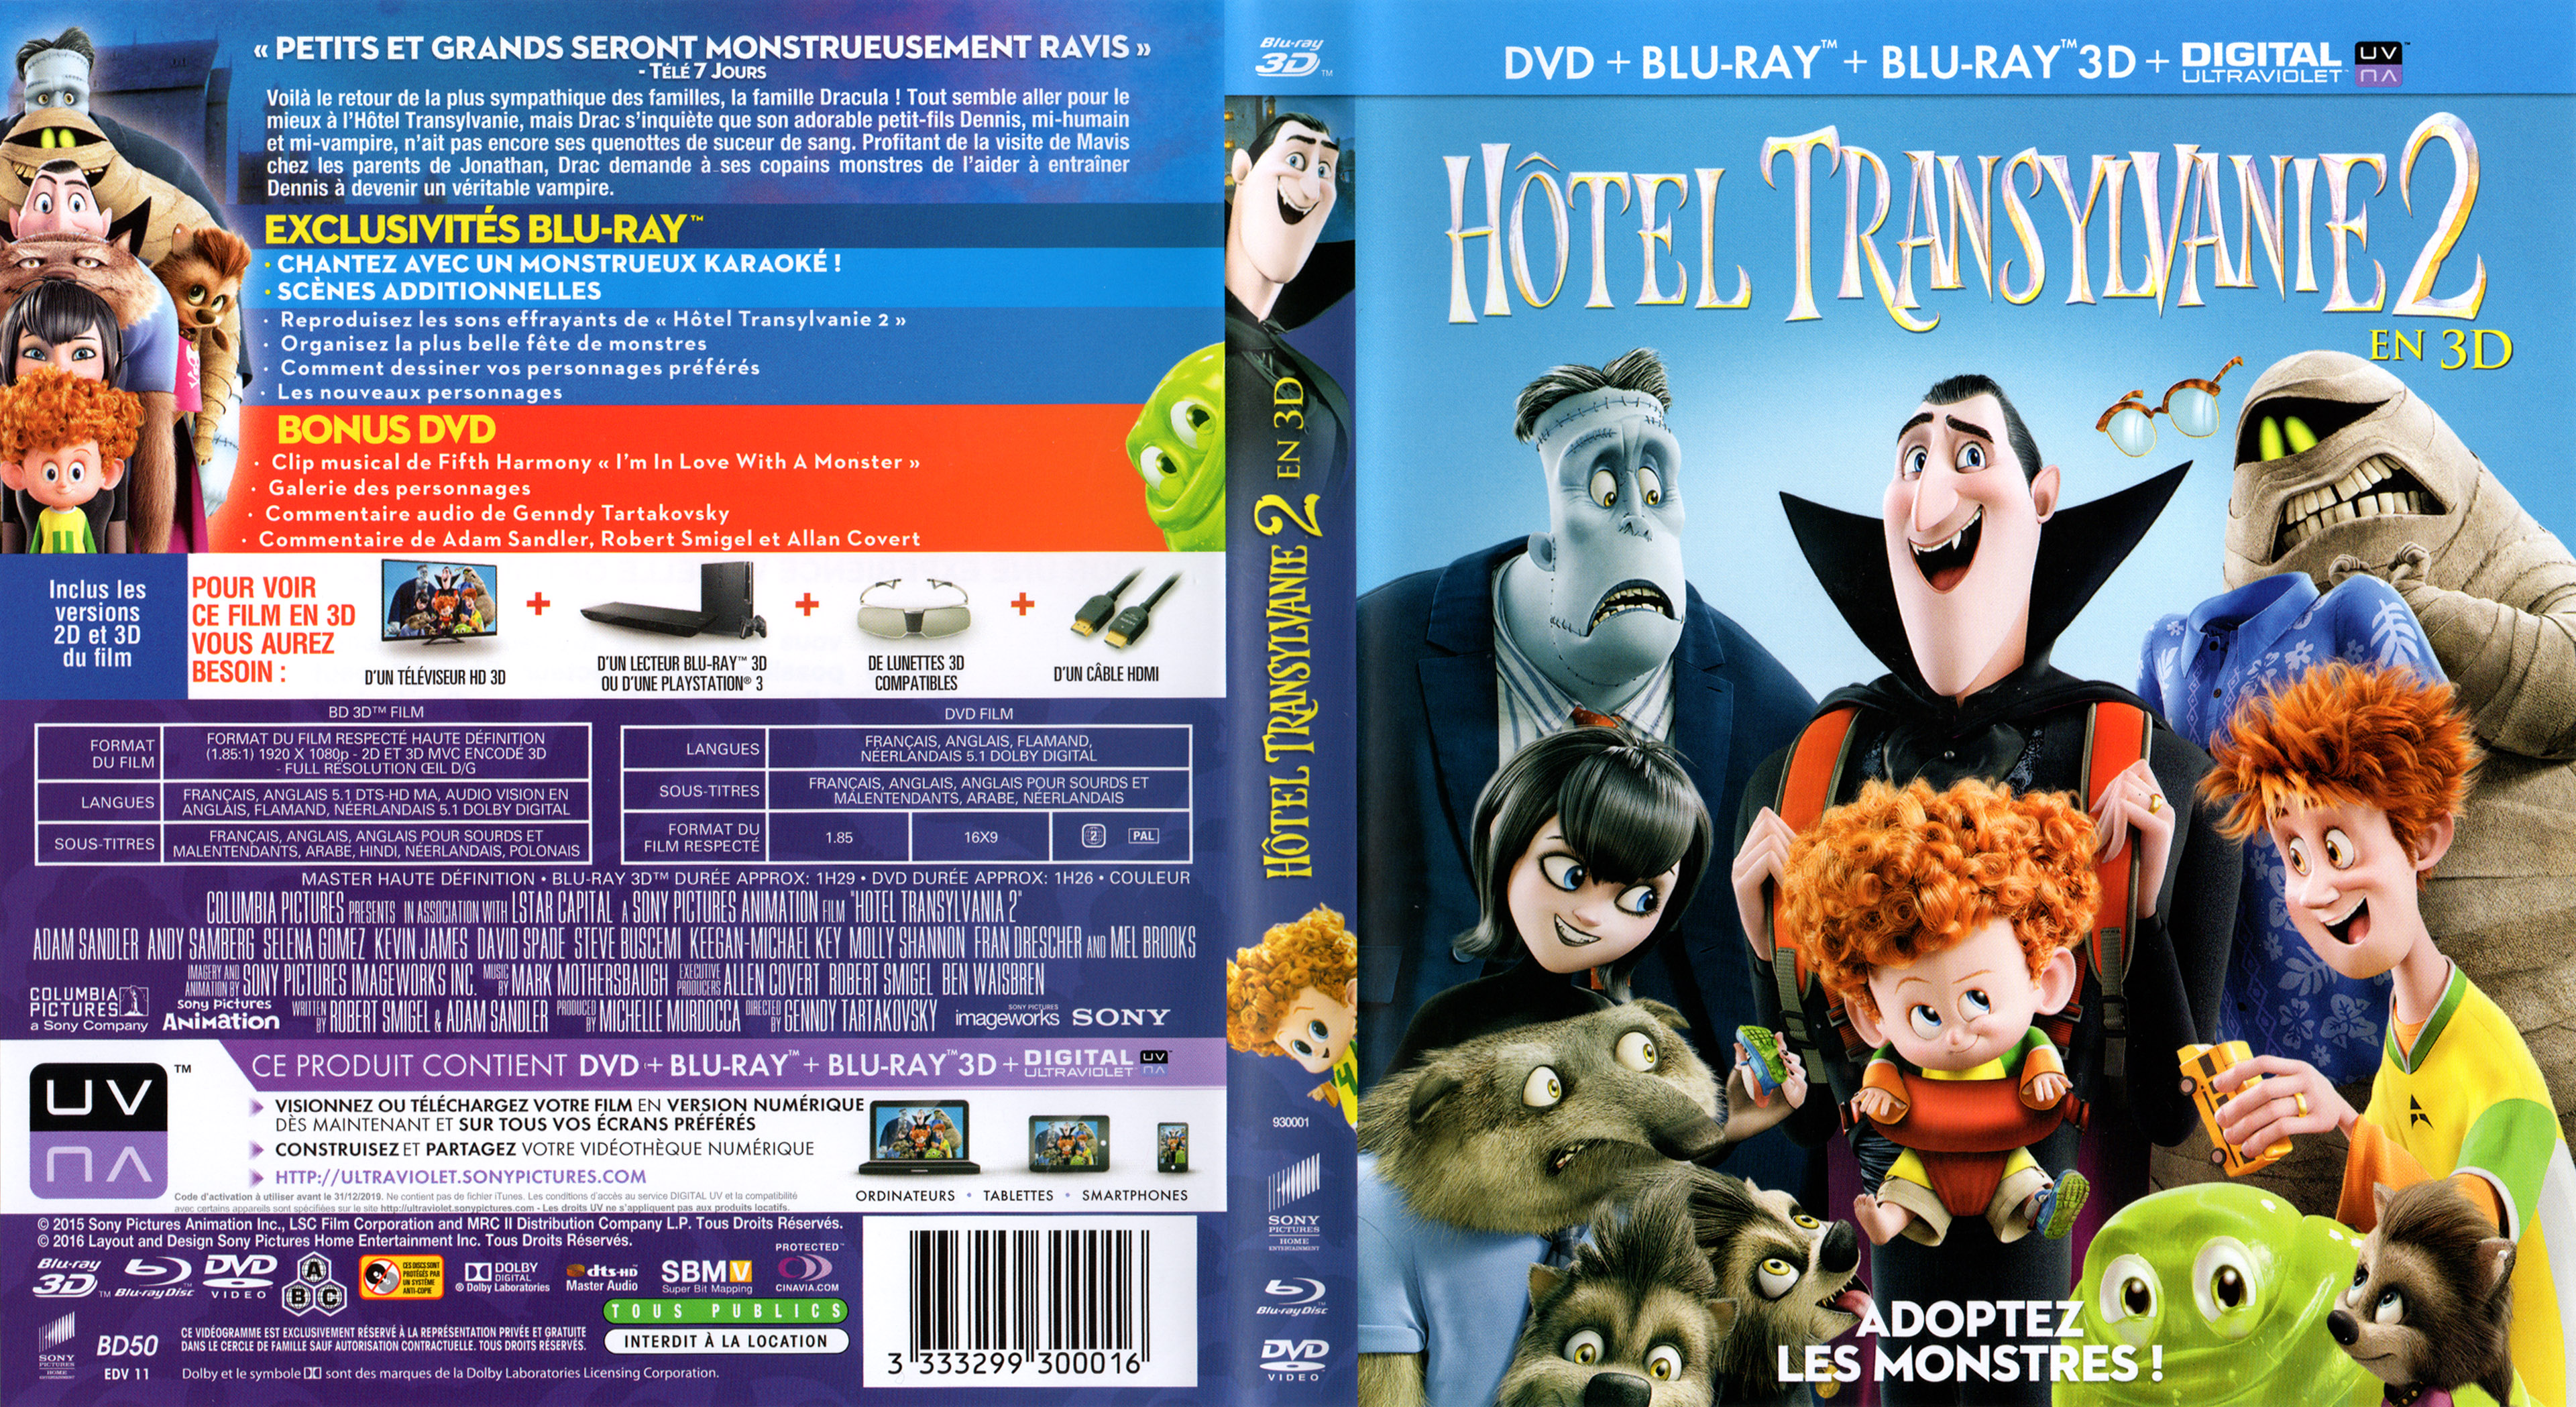 Jaquette DVD Hotel Transylvanie 2 3D (BLU-RAY)